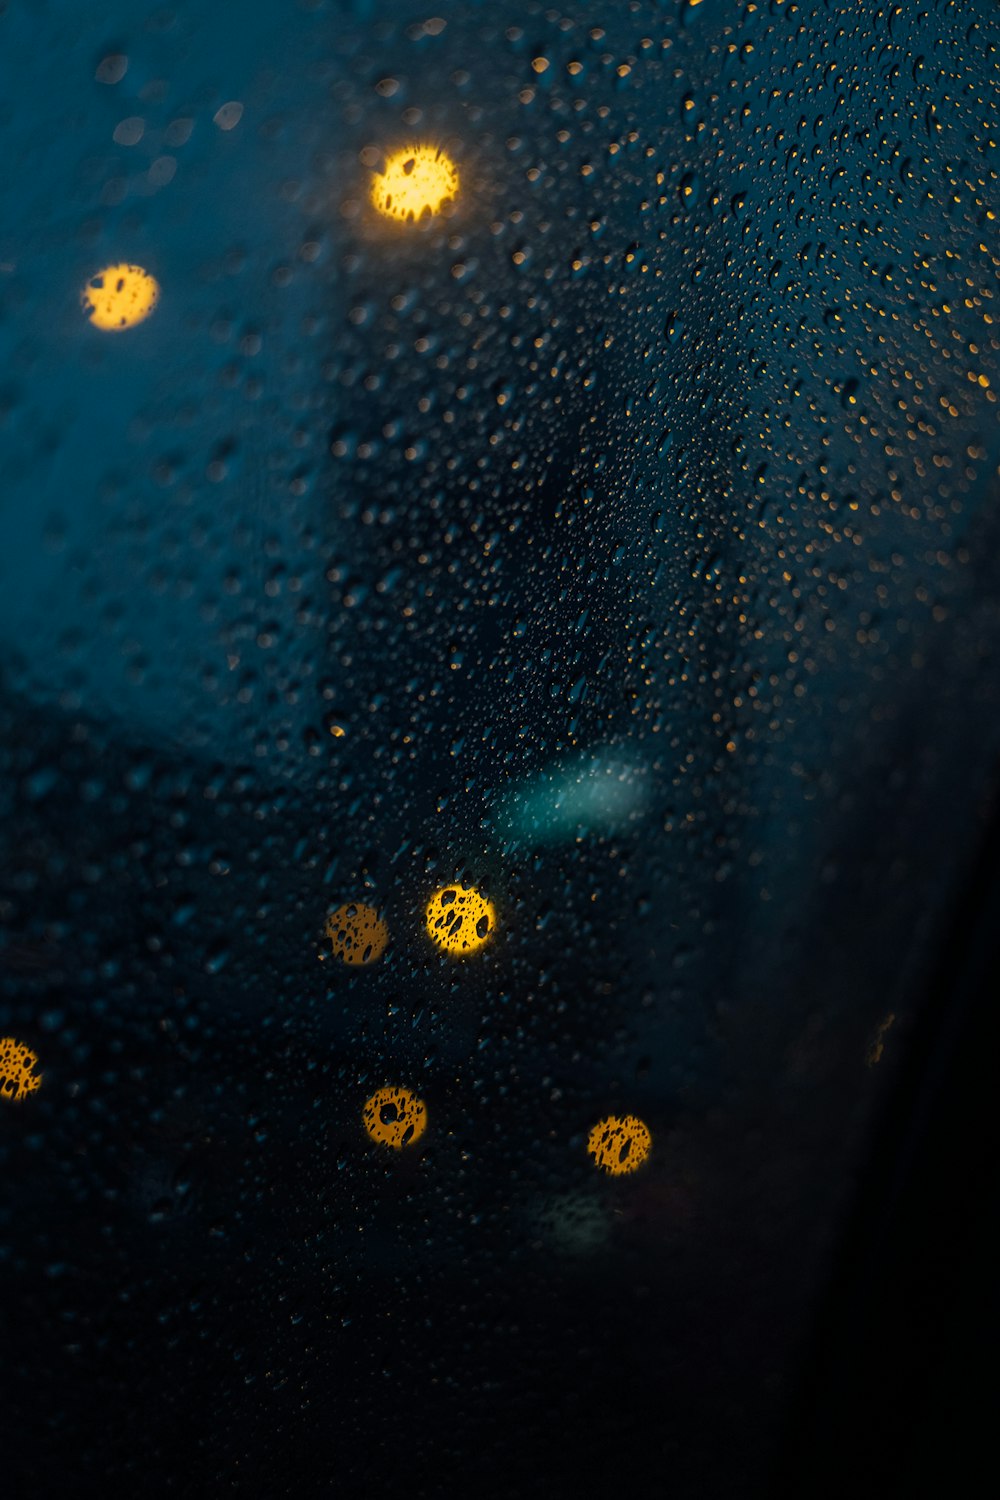 rain drops on a window with yellow lights